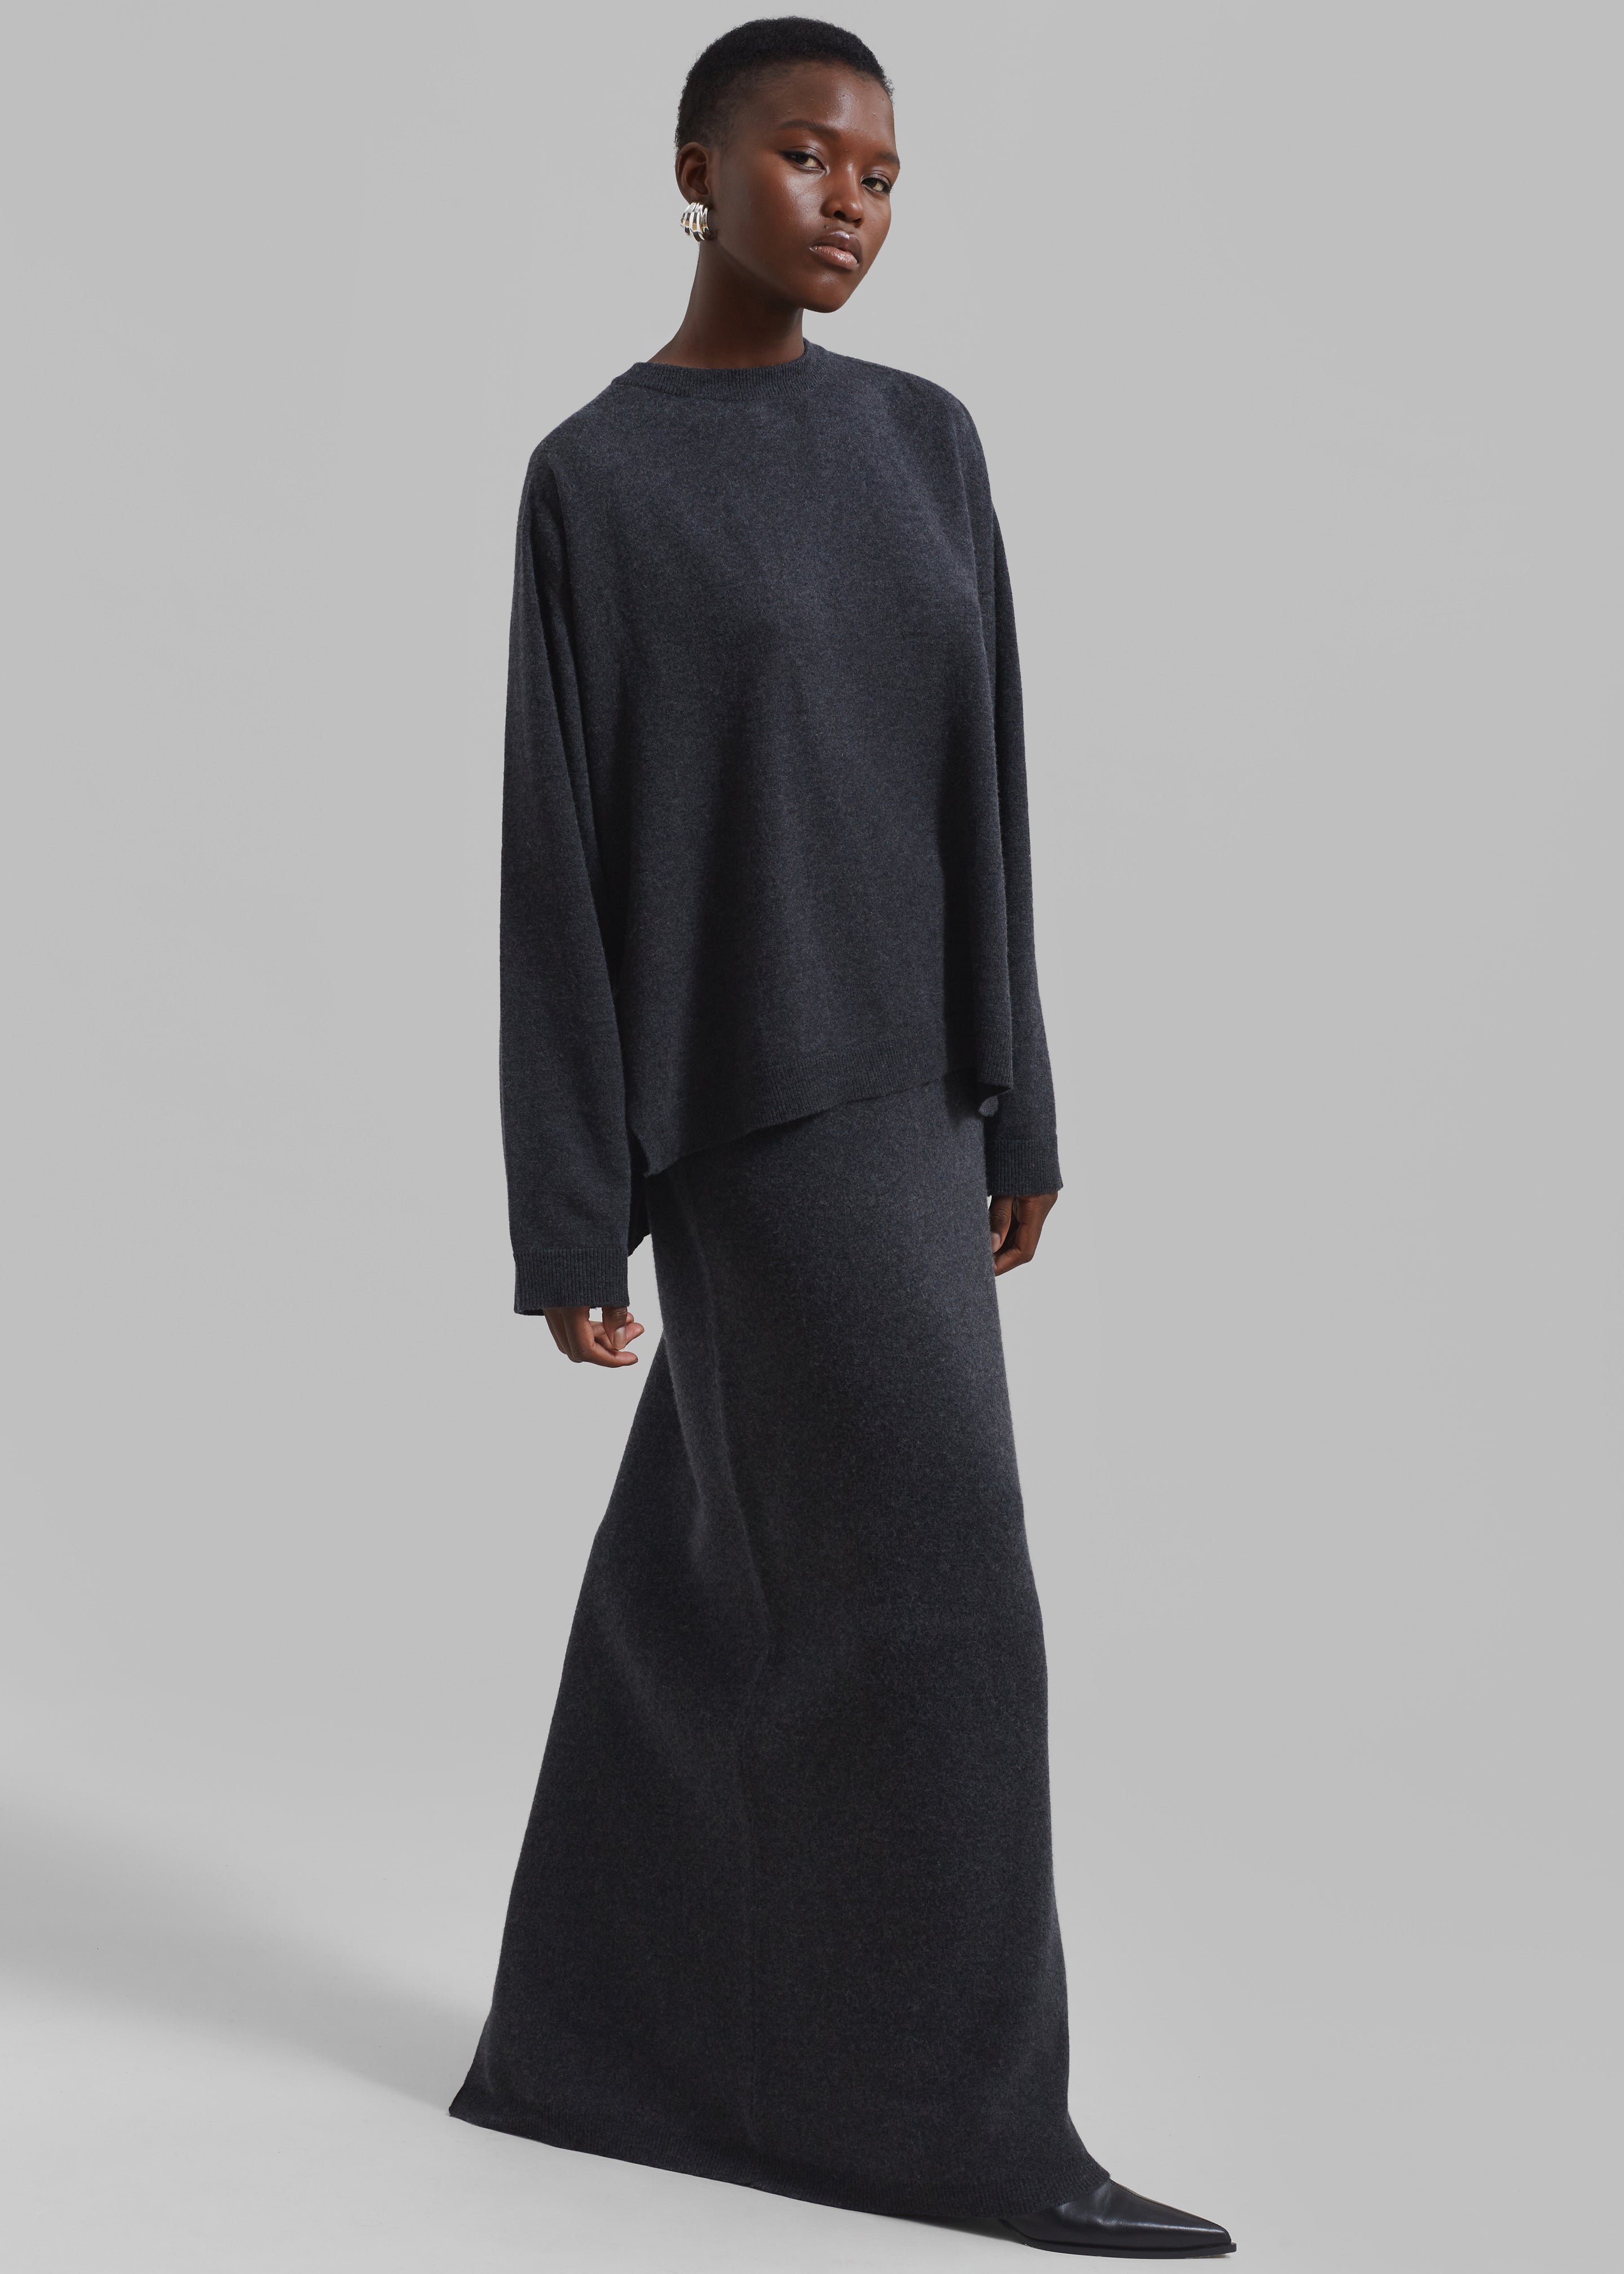 Bellamy Wool Skirt - Charcoal - 1